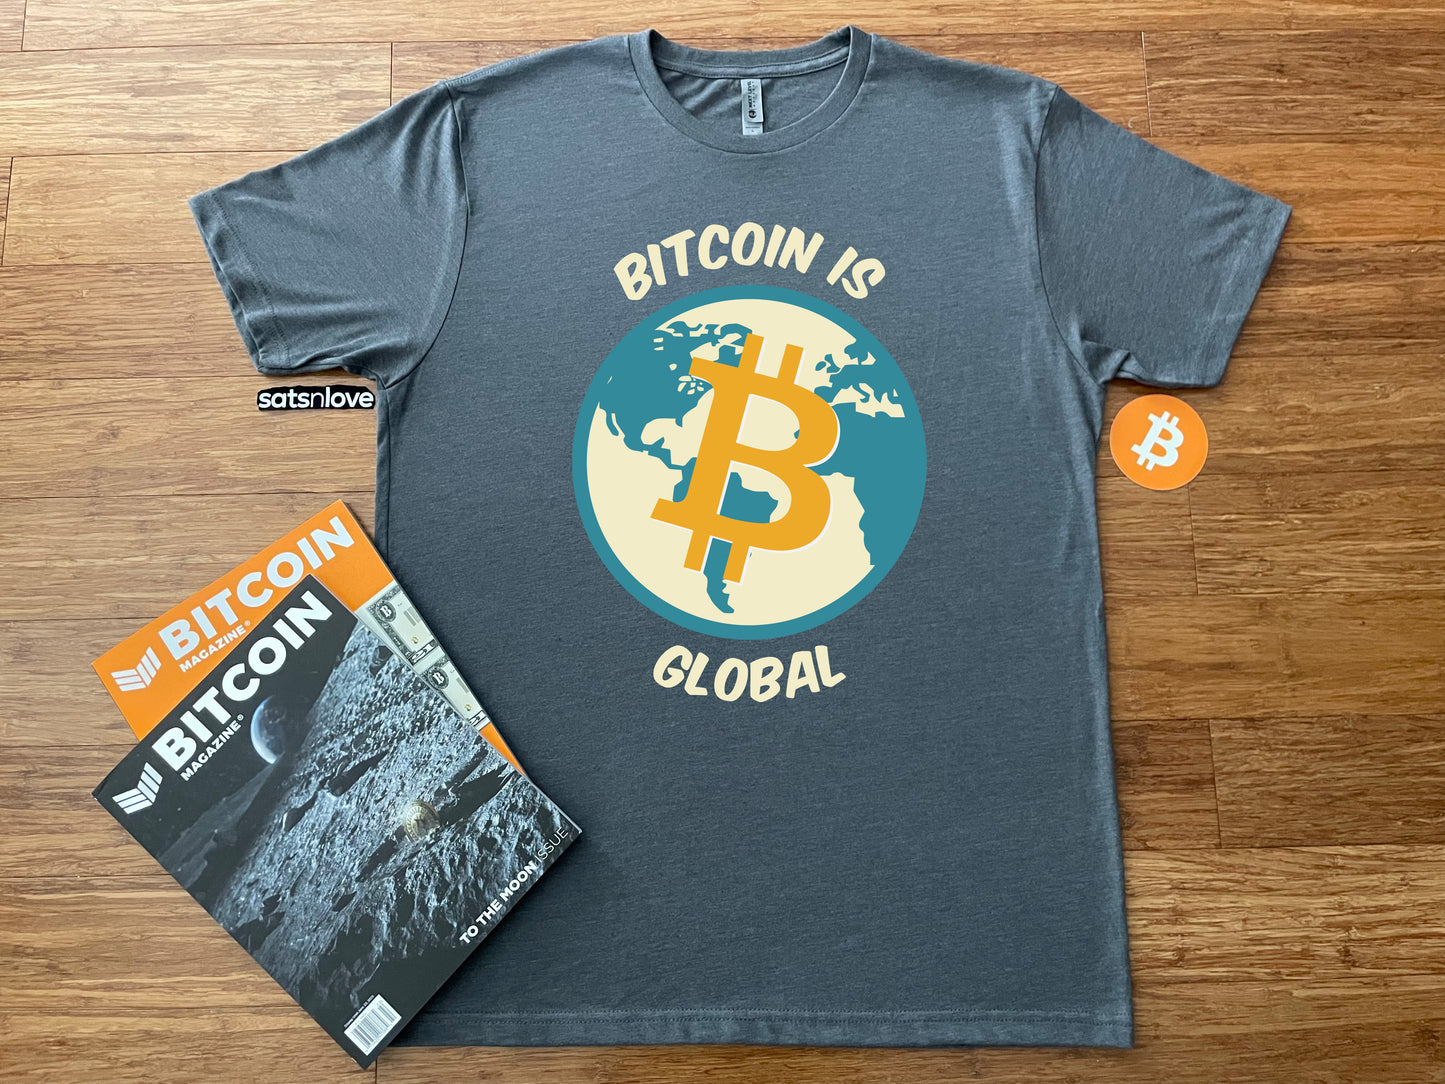 Bitcoin is Global